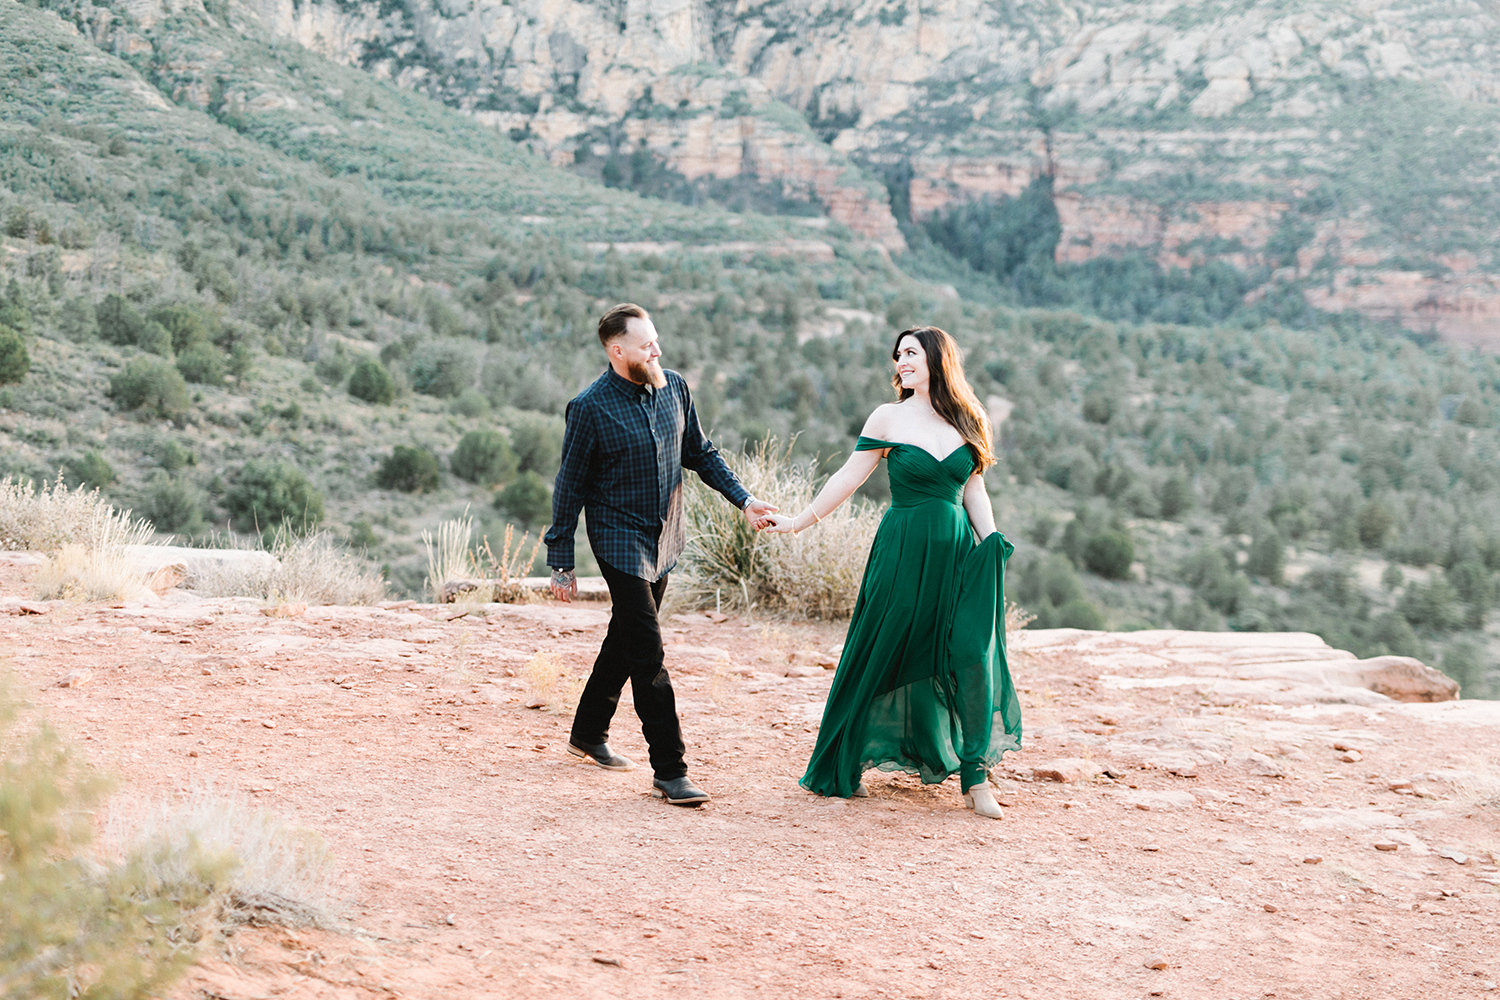 Nicole and Justin's stunning engagement shoot at the gorgeous Merry-Go-Round-Rock in Sedona, Arizona. Head to the blog to get a peek into our time together!#EngagementPhotos #EngagementPhotoIdeas #EngagementPhotoShoot #EngagementPhotoOutfits #EngagementPhotoPoses #ArizonaWedding #ArizonaWeddingIdeas #MerryGoRoundRockSedonaArizona #ScenicSpotsInArizona #SedonaArizona #ArizonaWeddingPhotography #WeddingIdeas #DesertPhotoShoot #ArizonaDesert #DesertLandscape #EngagementPortraits #ArizonaPhotographer #ArizonaPhotography